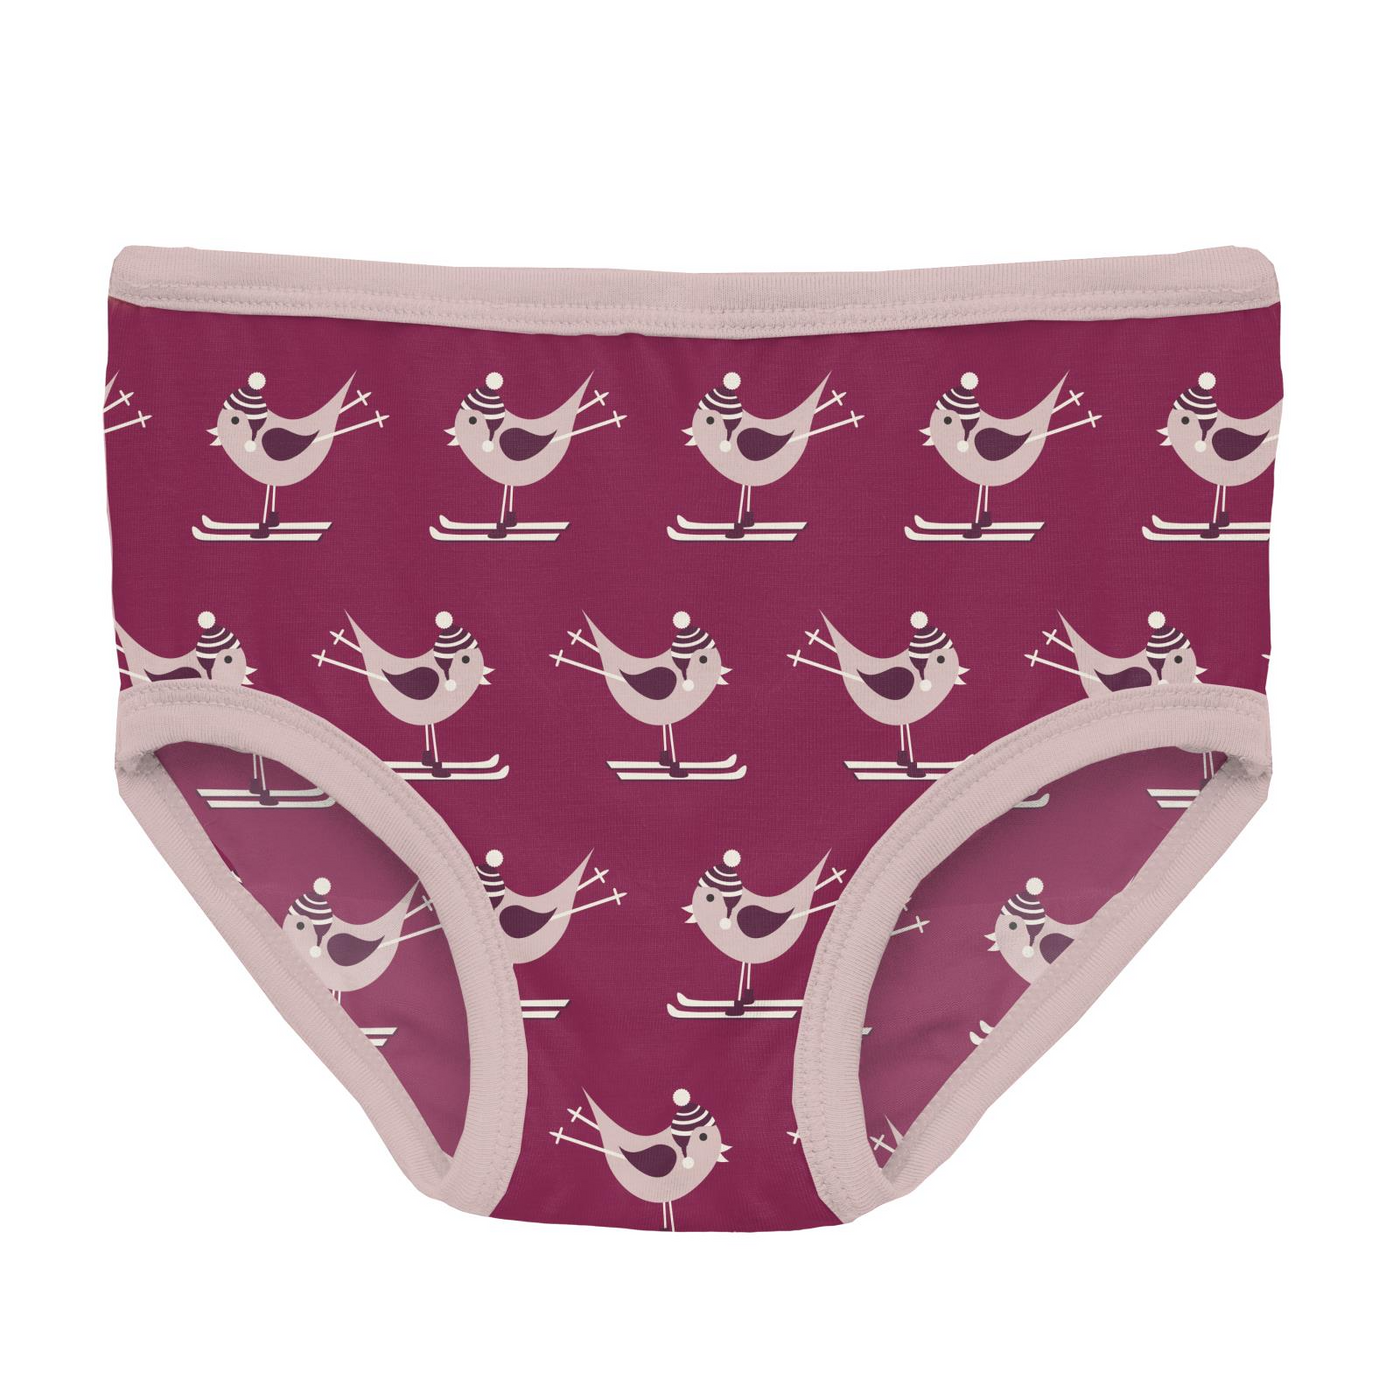 Kickee Pants Girl's Underwear: Berry Ski Birds